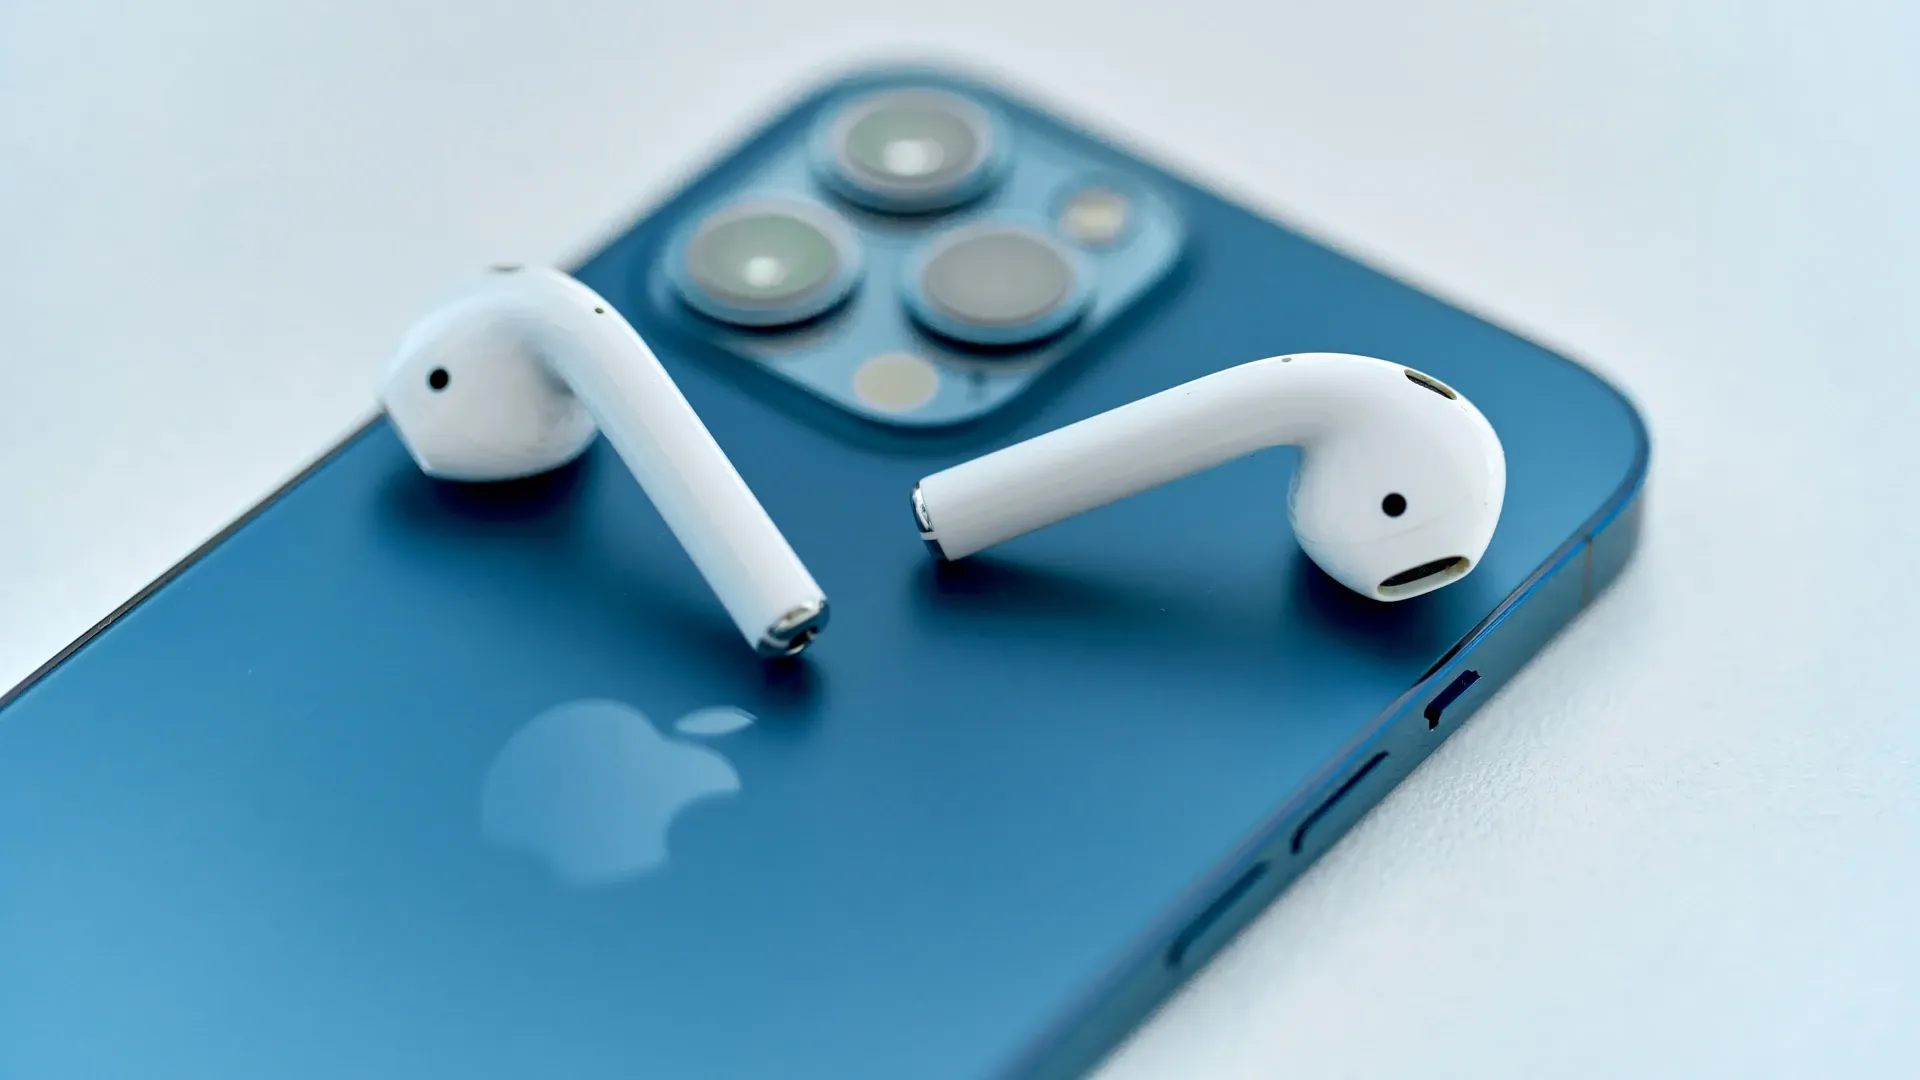 Fone Apple AirPods 2 sobre iPhone azul em fundo cinza